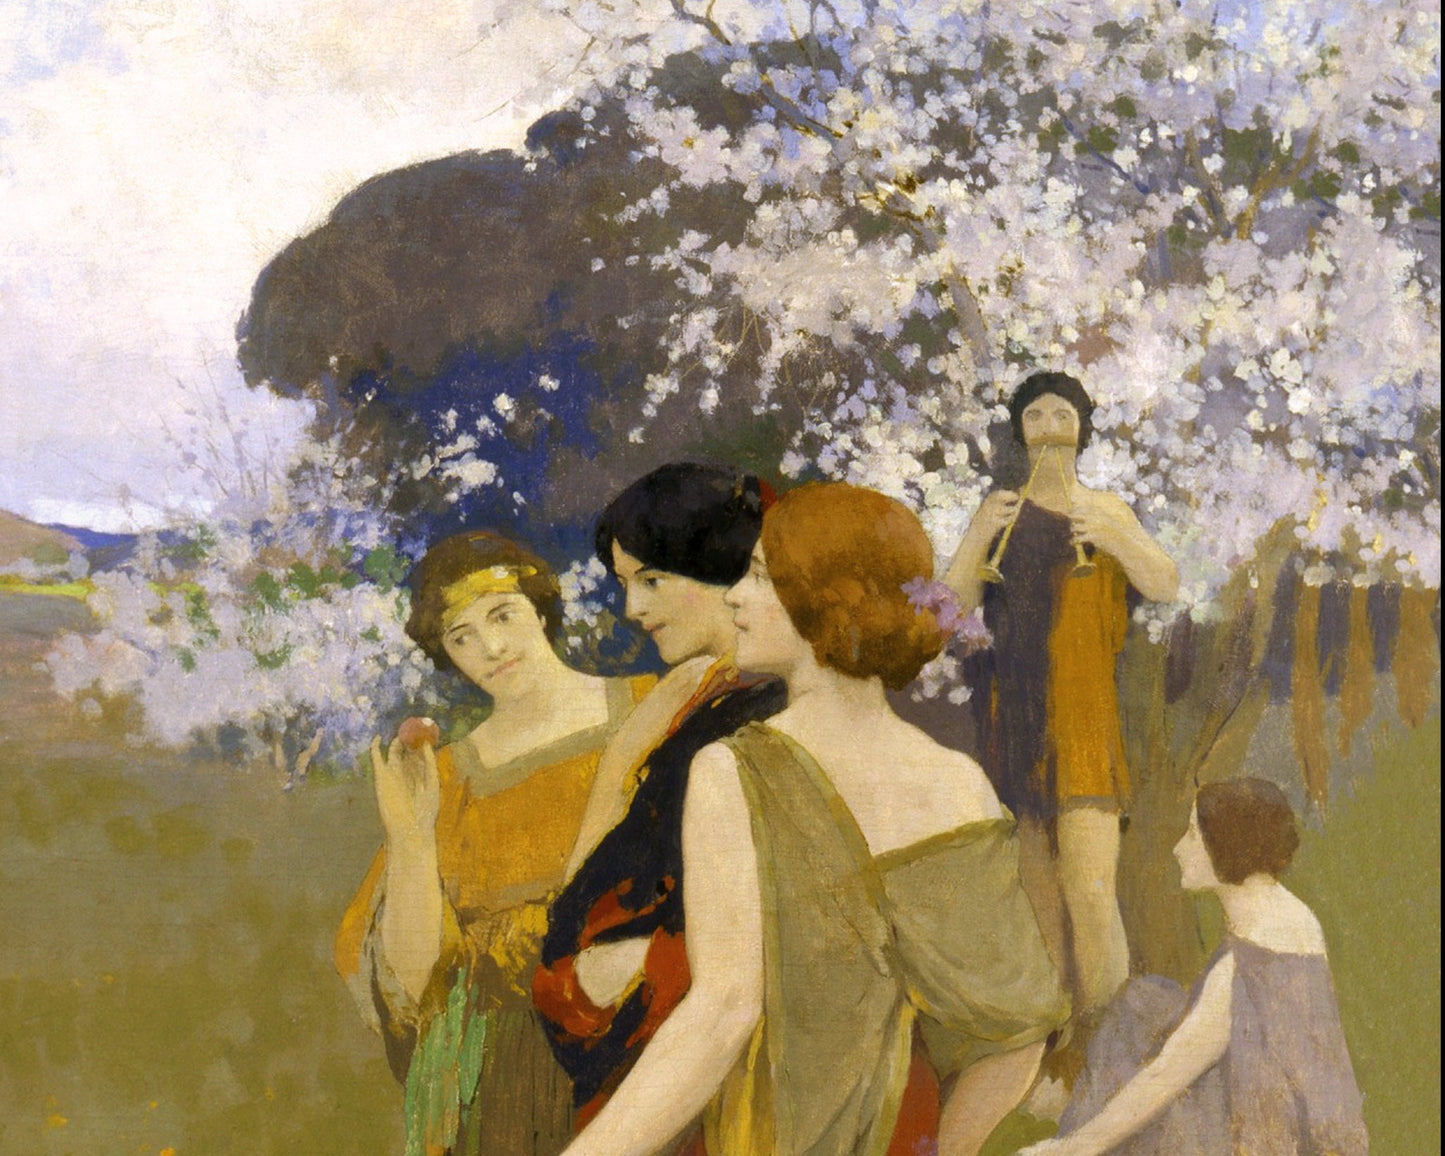 Dancing art | Spring dance | Art nouveau wall art | Vintage women dancing | Dancers painting | Arthur F. Matthews